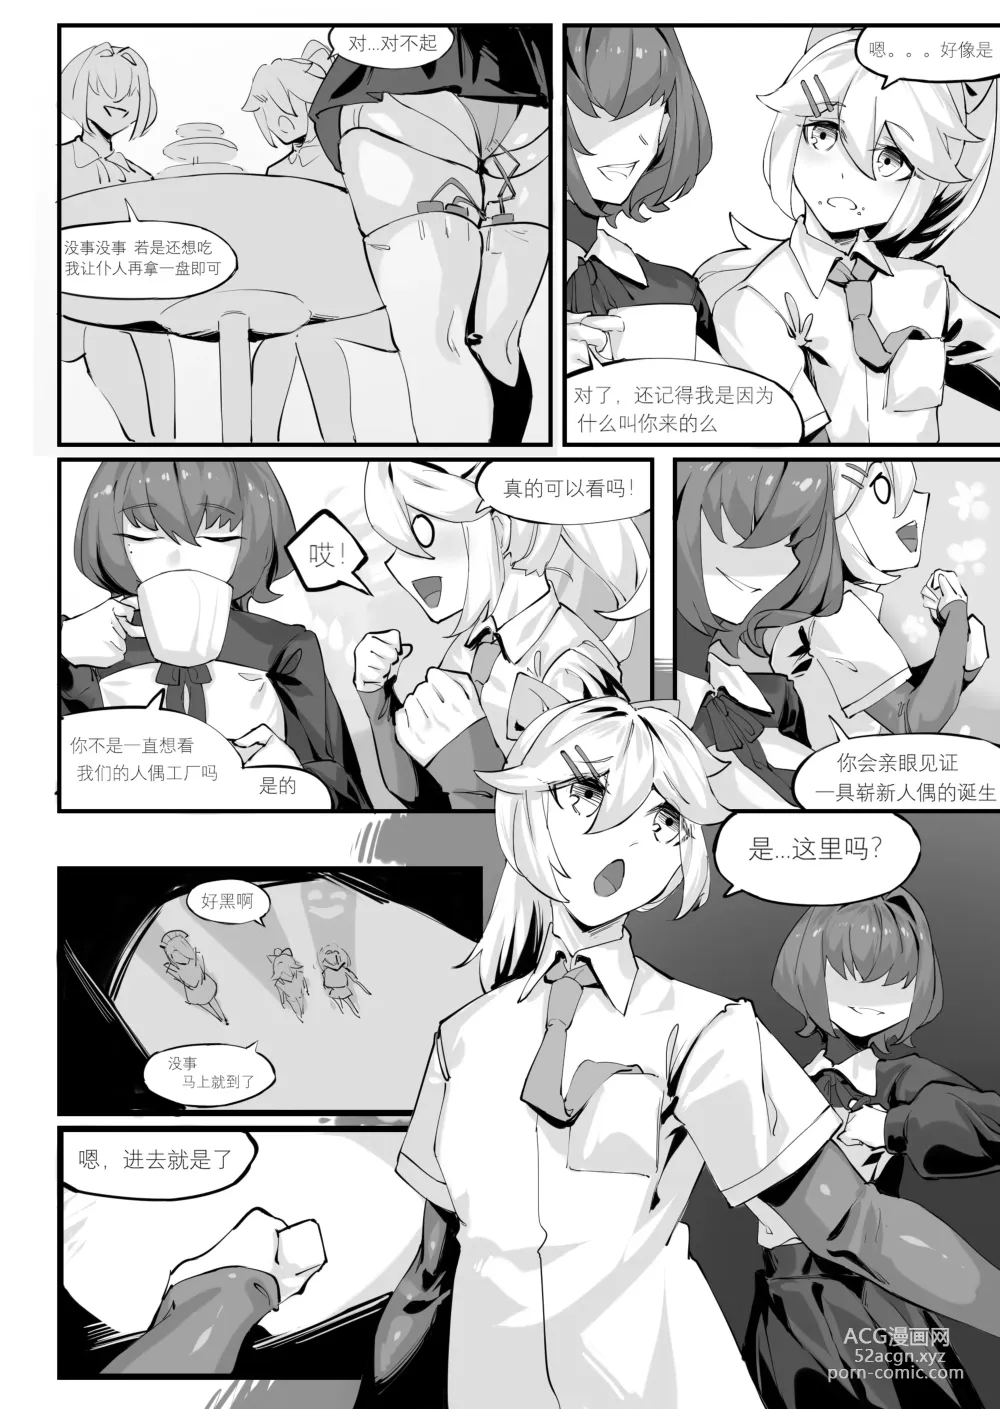 Page 3 of doujinshi 一起成为人偶吧